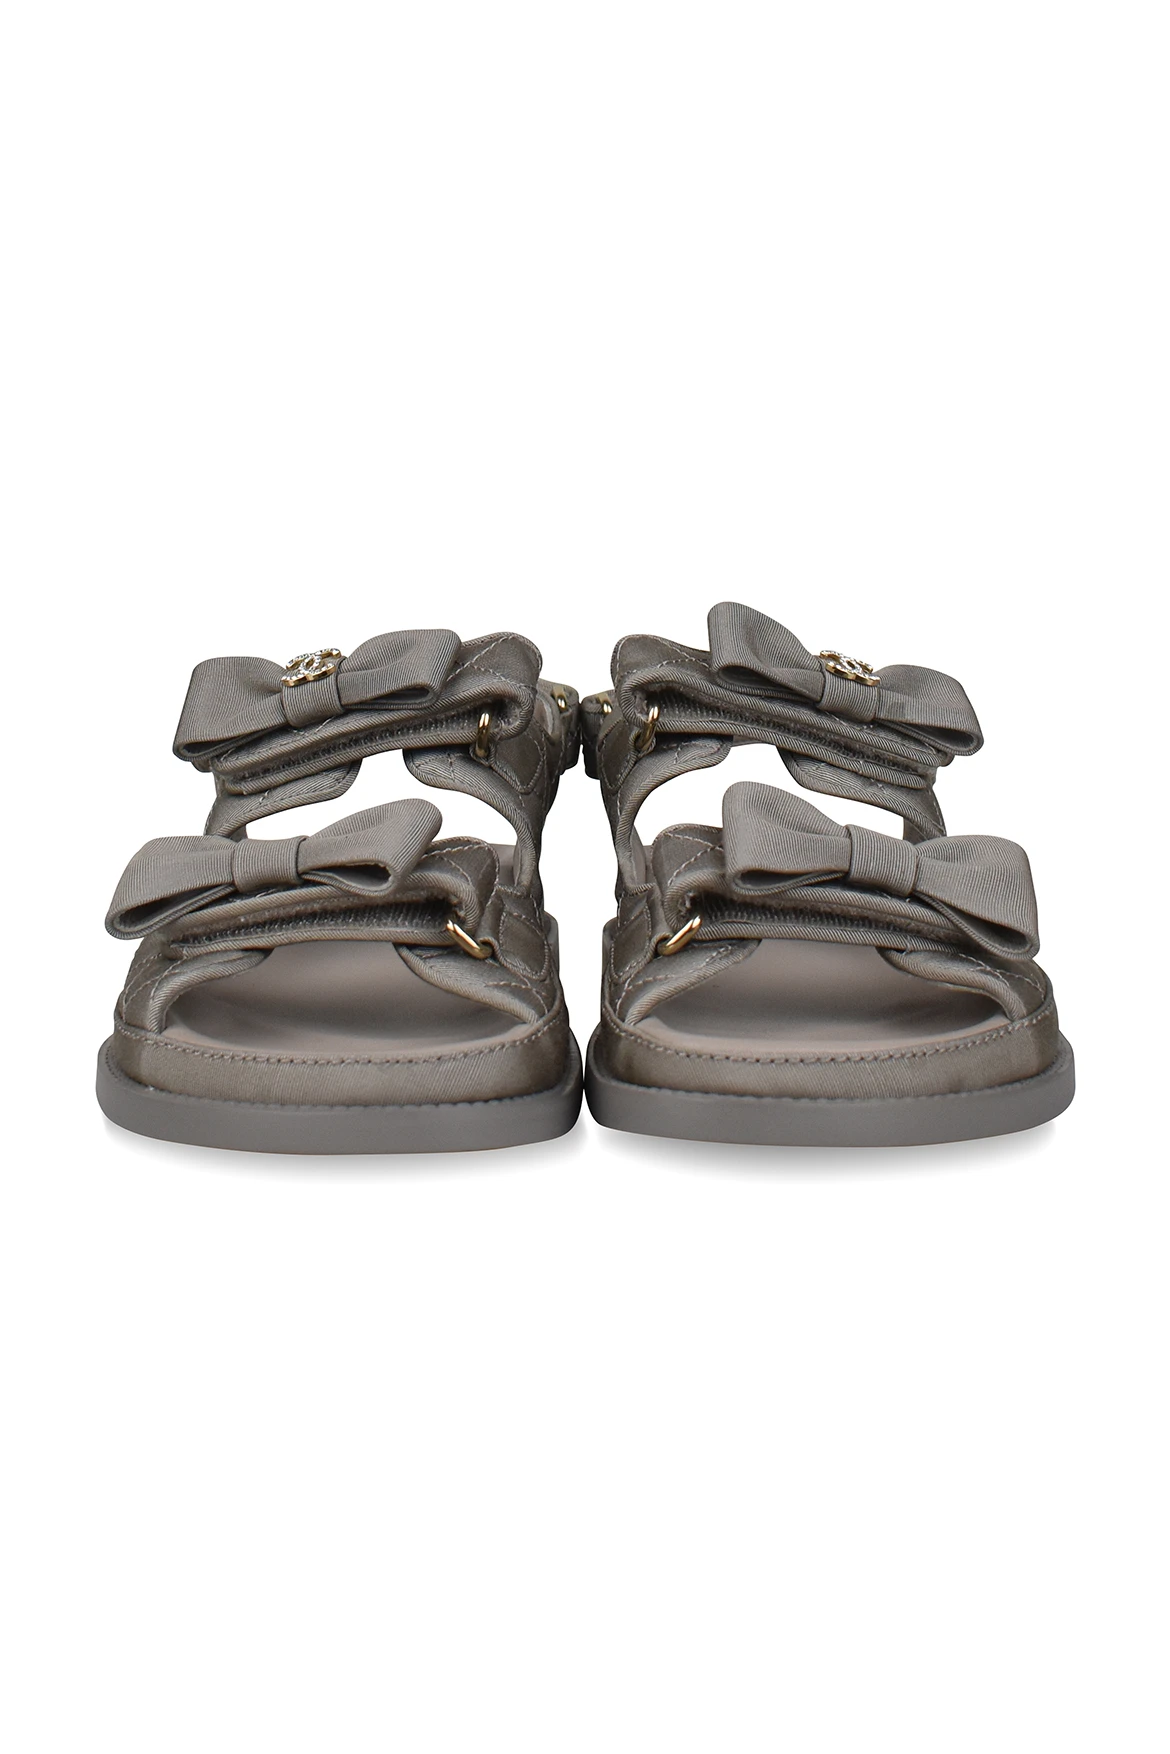 Chanel  | Sandals Dad Grey , référence : G39820 X05912 0S296,商家别样头等仓,价格¥6923